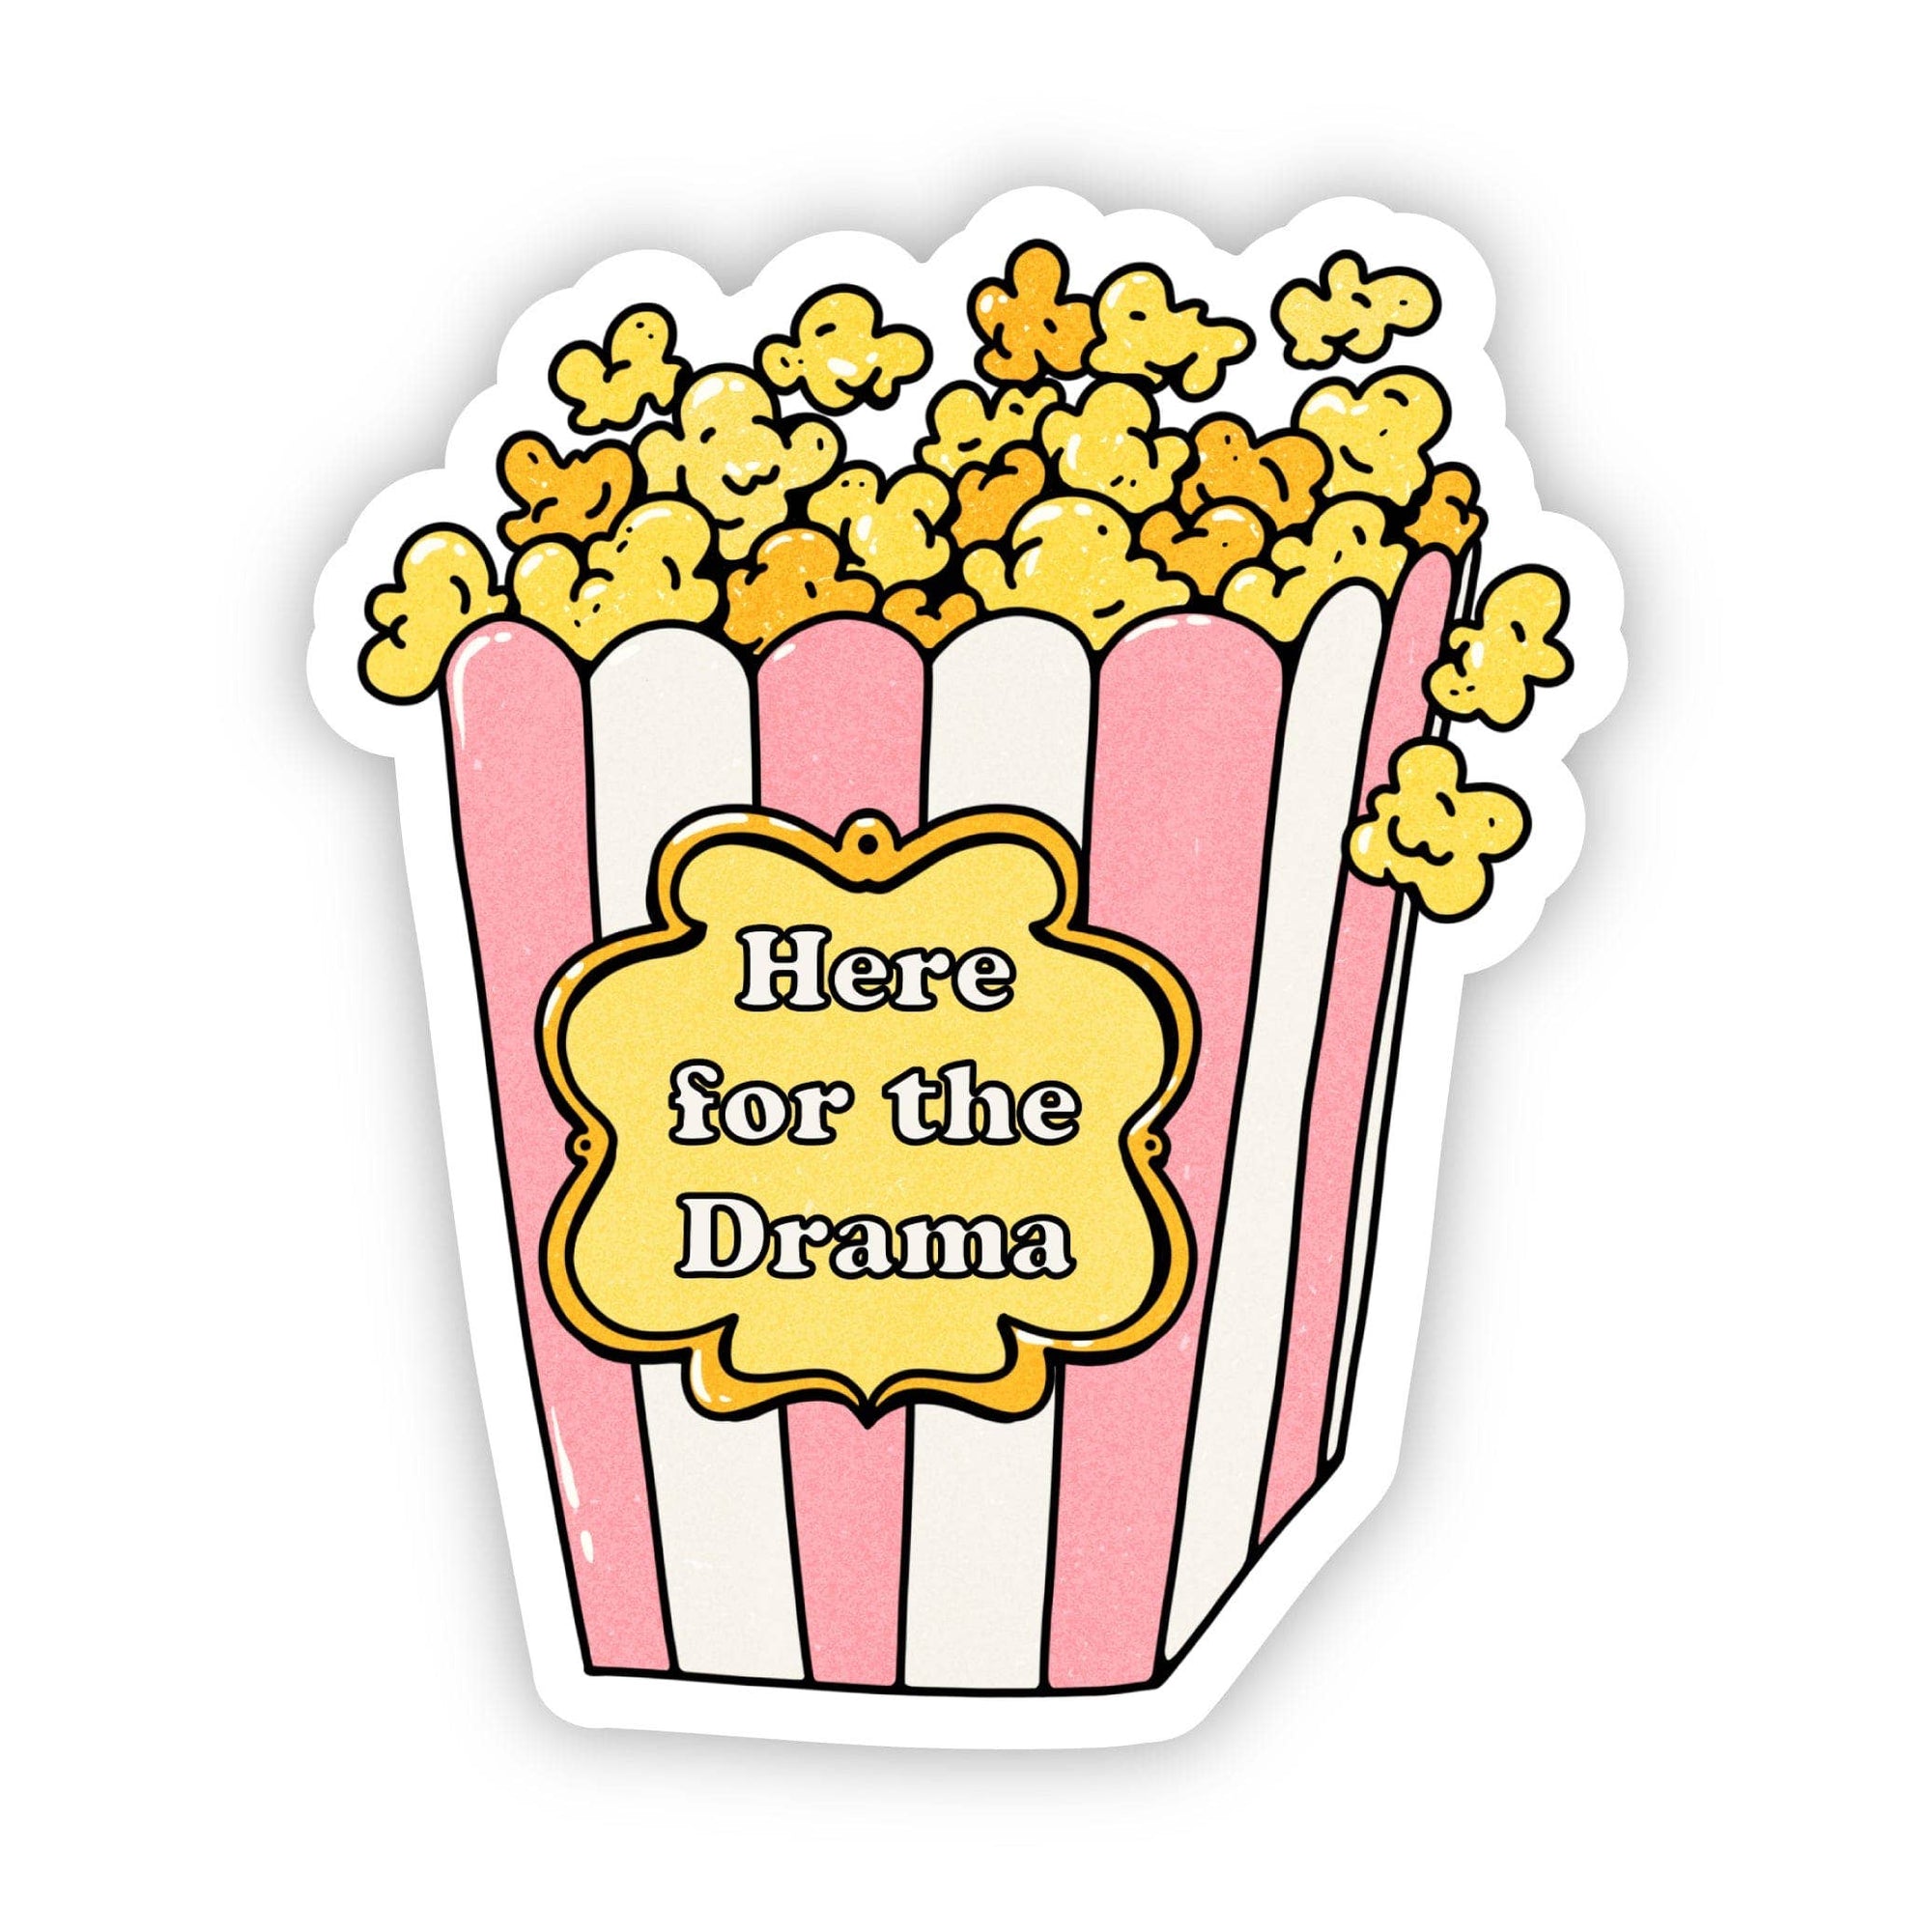 "Here for the drama" popcorn sticker